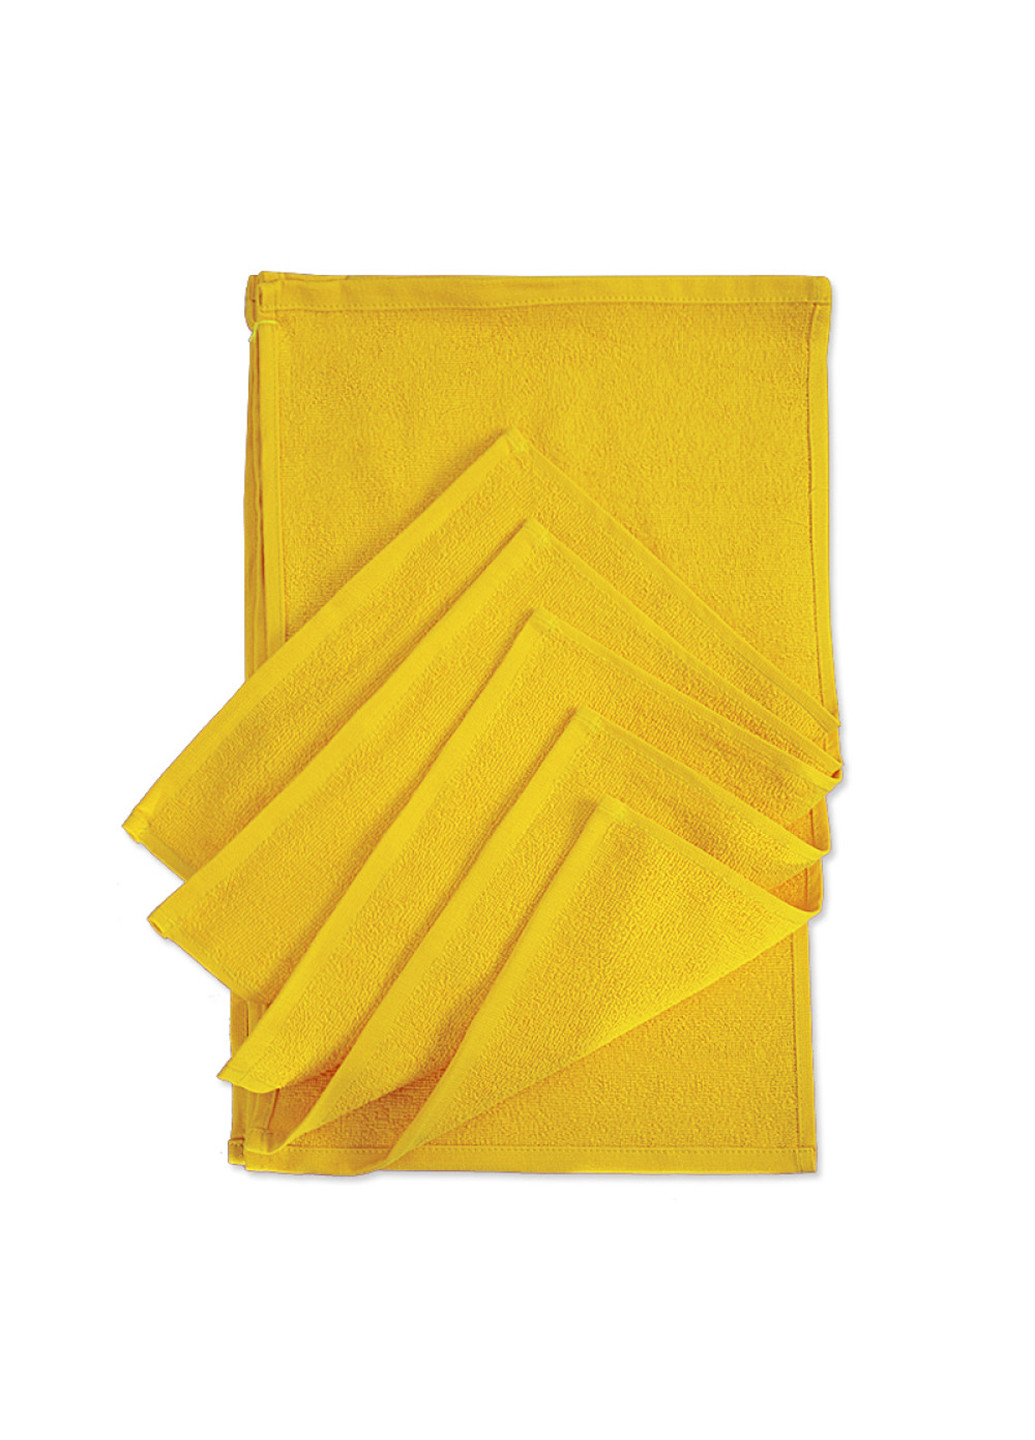 Ярослав набор салфеток яр-350 махровых, 30х50 см, 6 шт. однотонный желтый производство - Украина